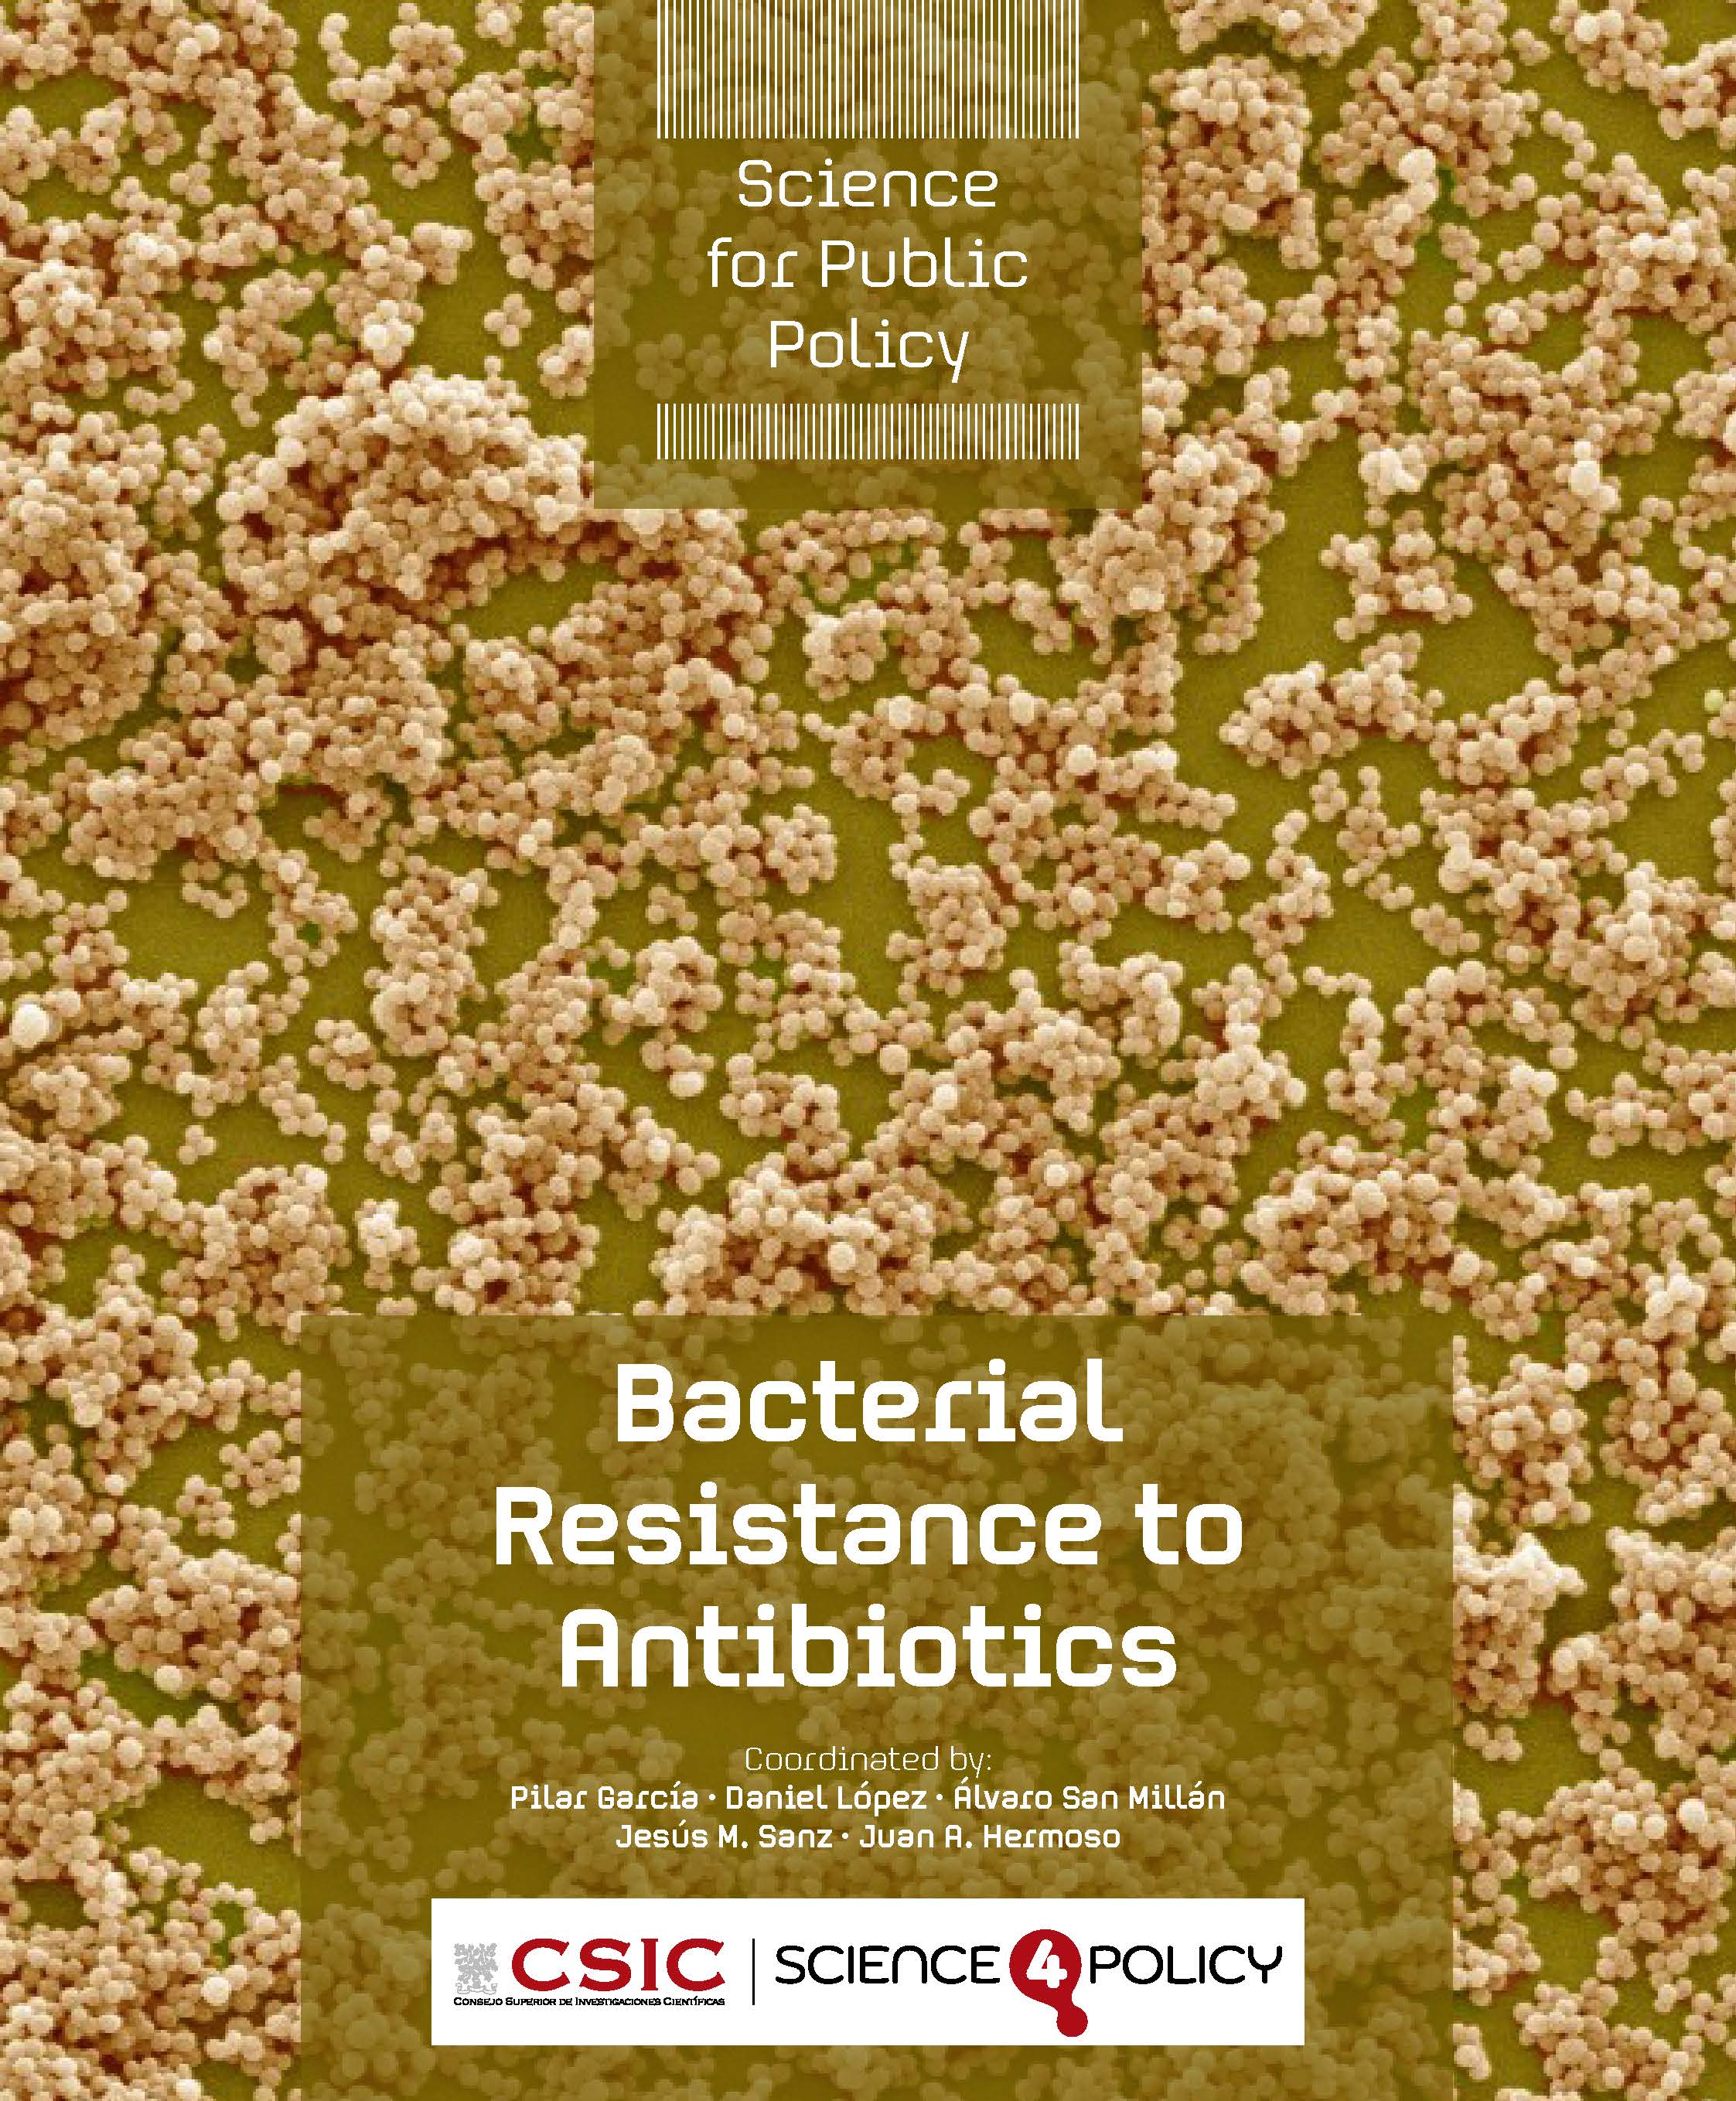 Bacterial resistance to antibiotics